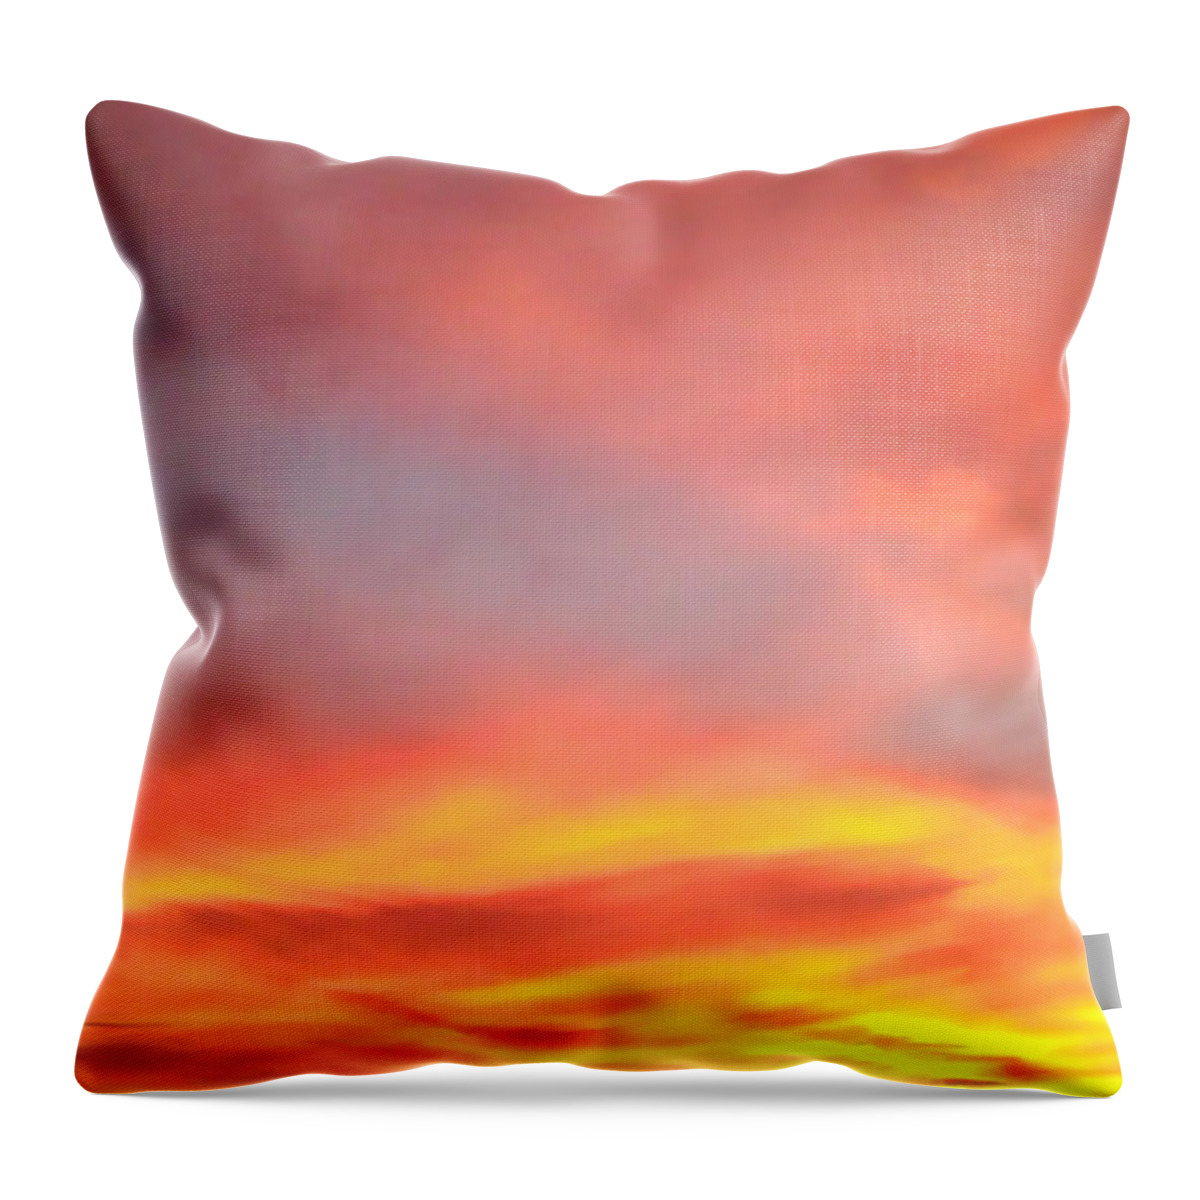 Zedi Throw Pillow featuring the photograph Sunset 4 by - Zedi -